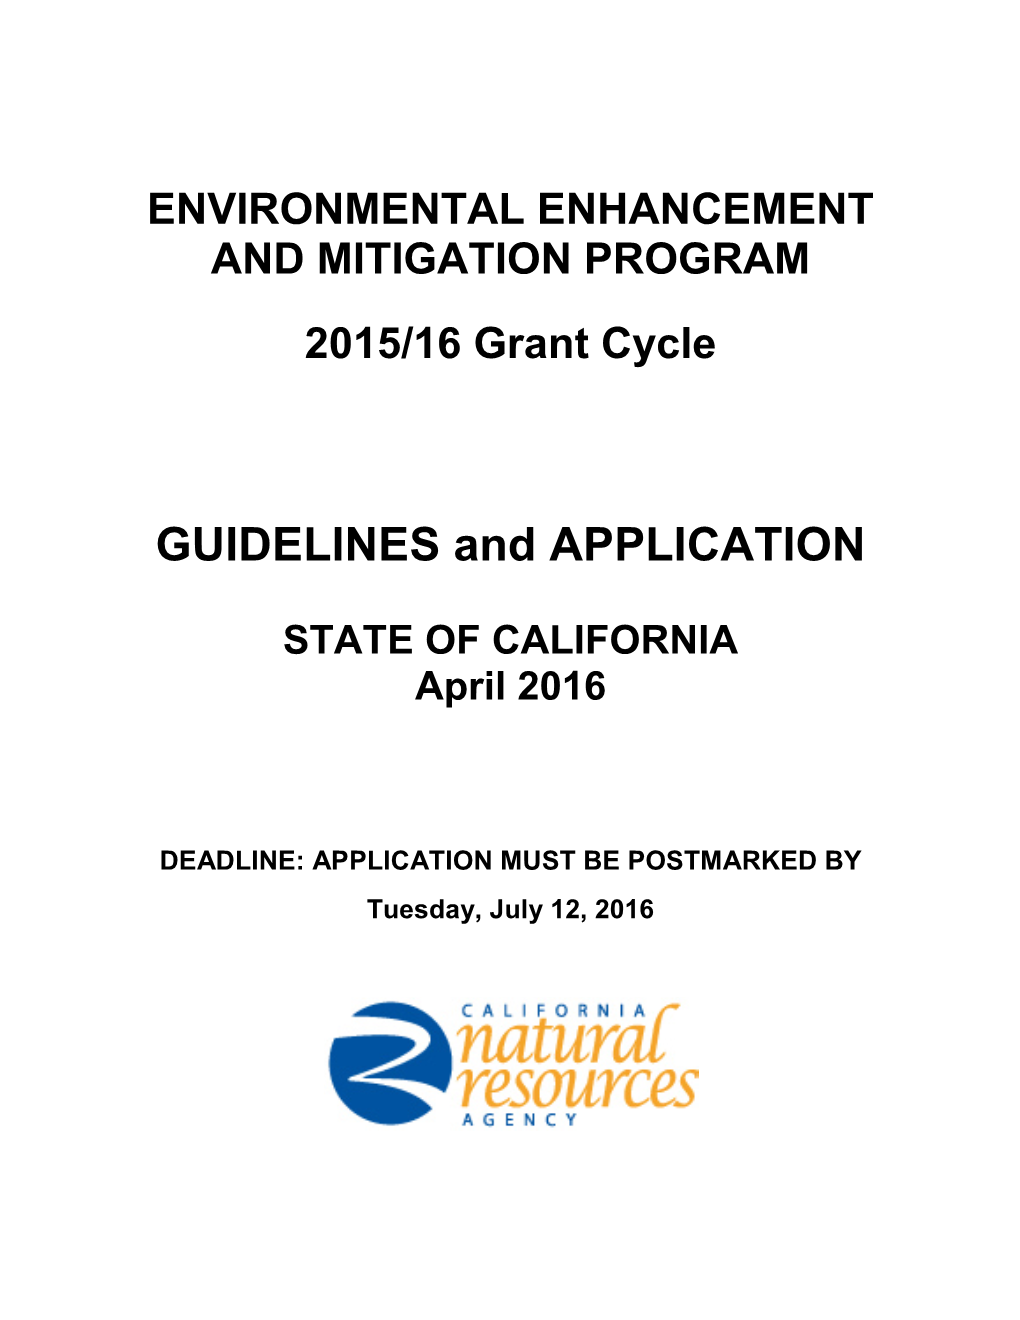 Environmental Enhancement and Mitigation Program